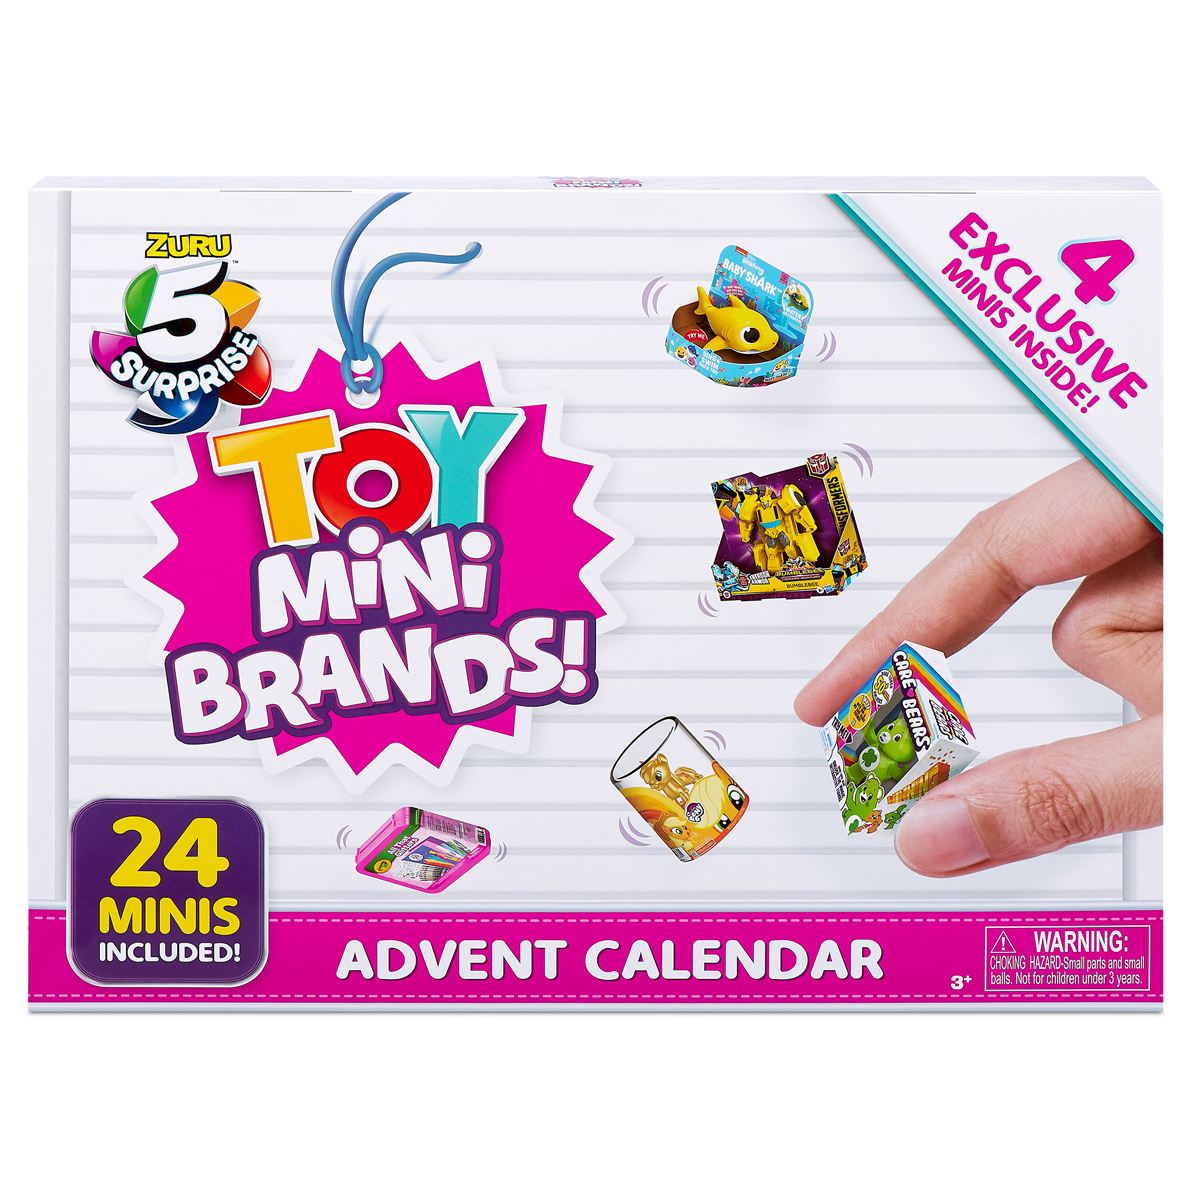 Toy Mini Brands Limited Edition Advent Calendar by ZURU.